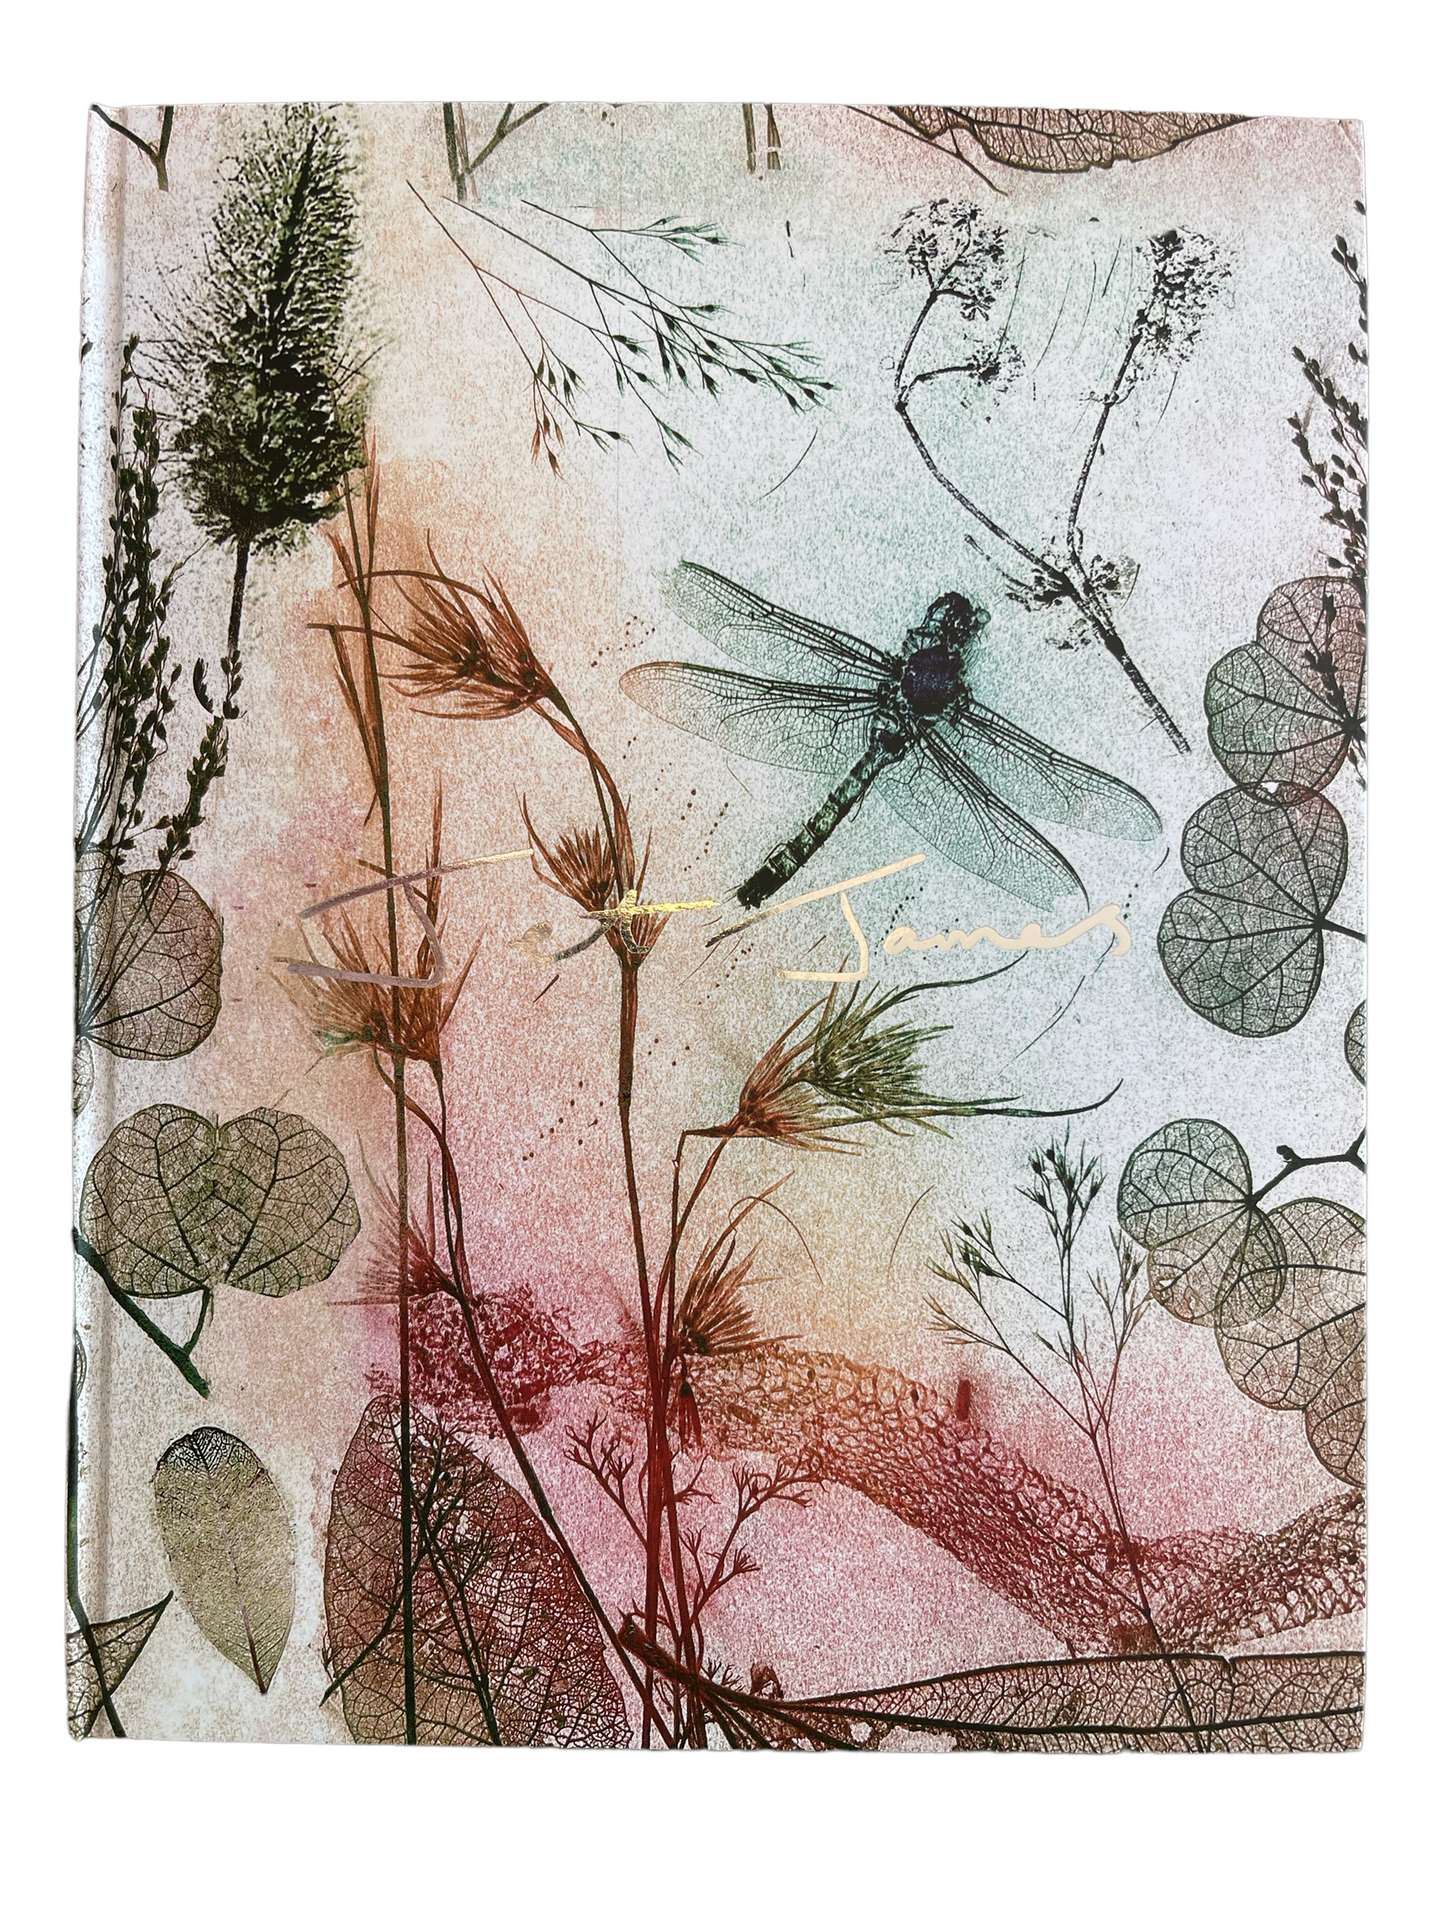 Artist Sketchbook - Rustic Dragonfly